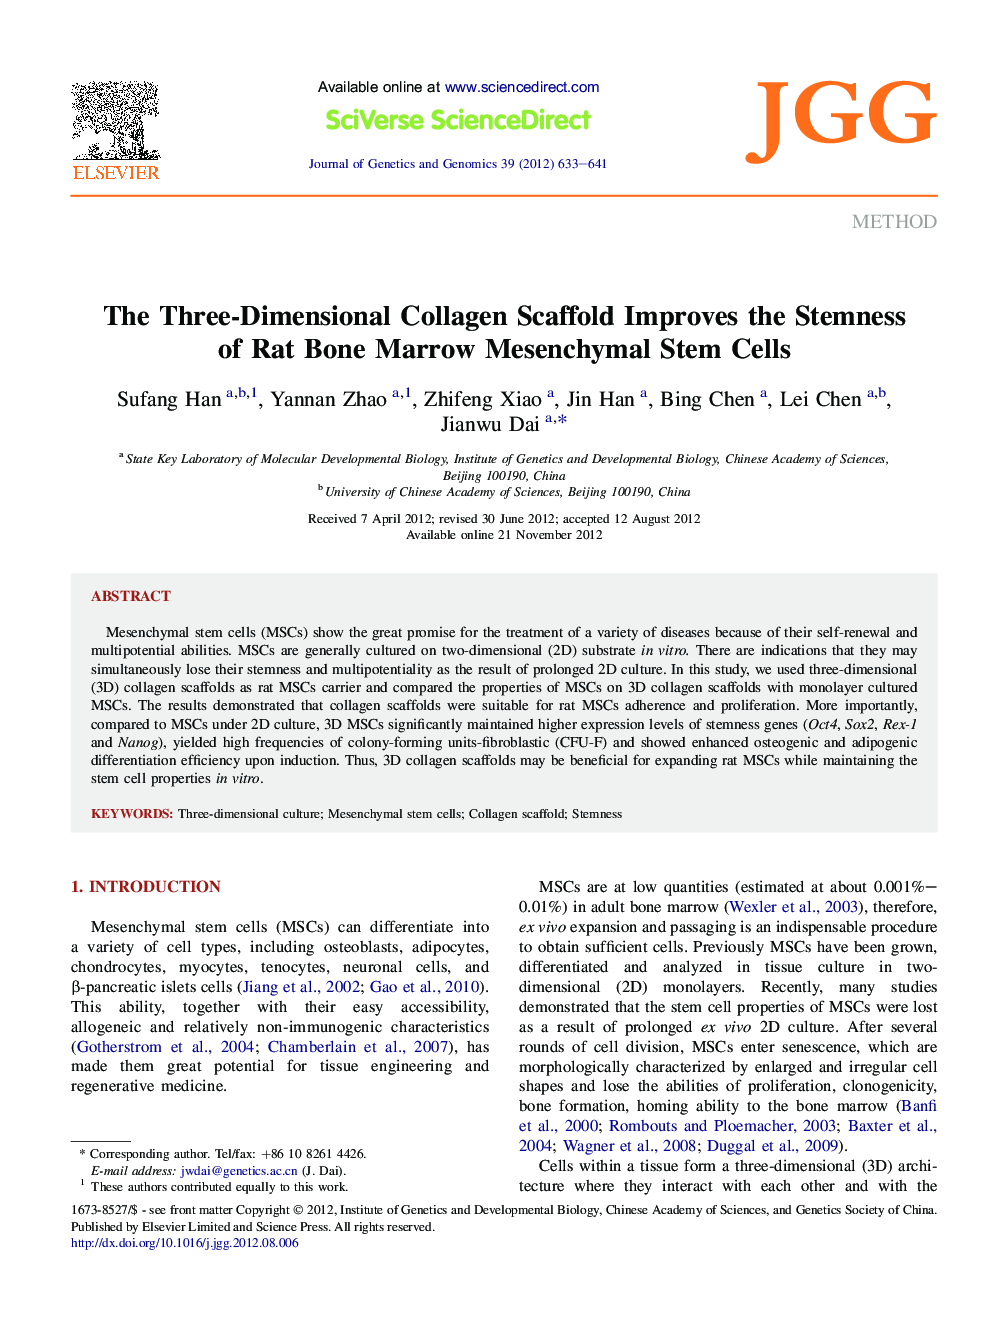 The Three-Dimensional Collagen Scaffold Improves the Stemness of Rat Bone Marrow Mesenchymal Stem Cells